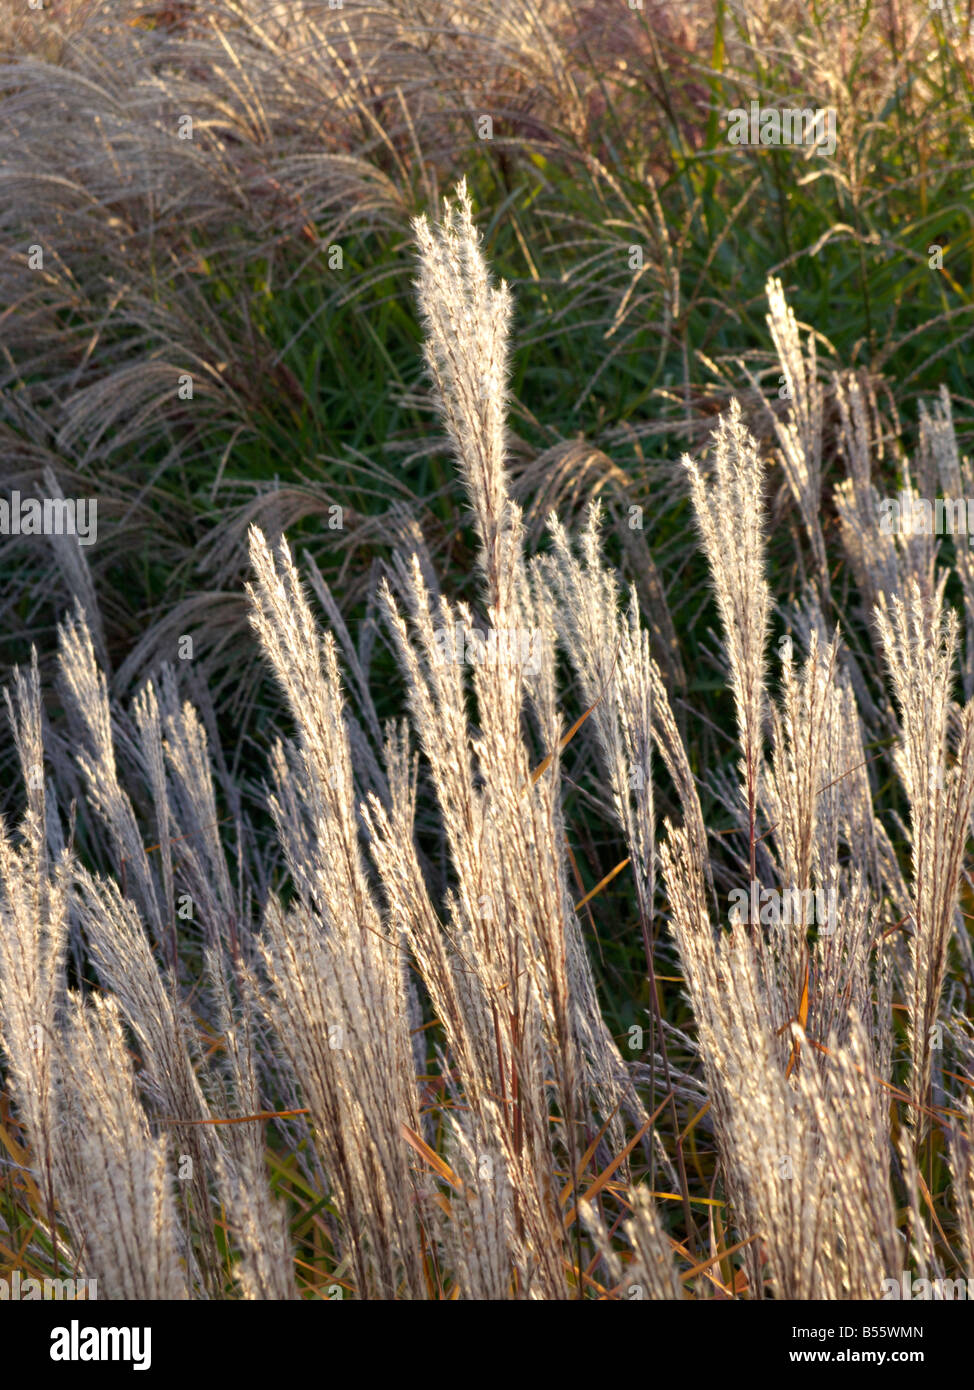 Amur silver grass (Miscanthus sacchariflorus) Stock Photo